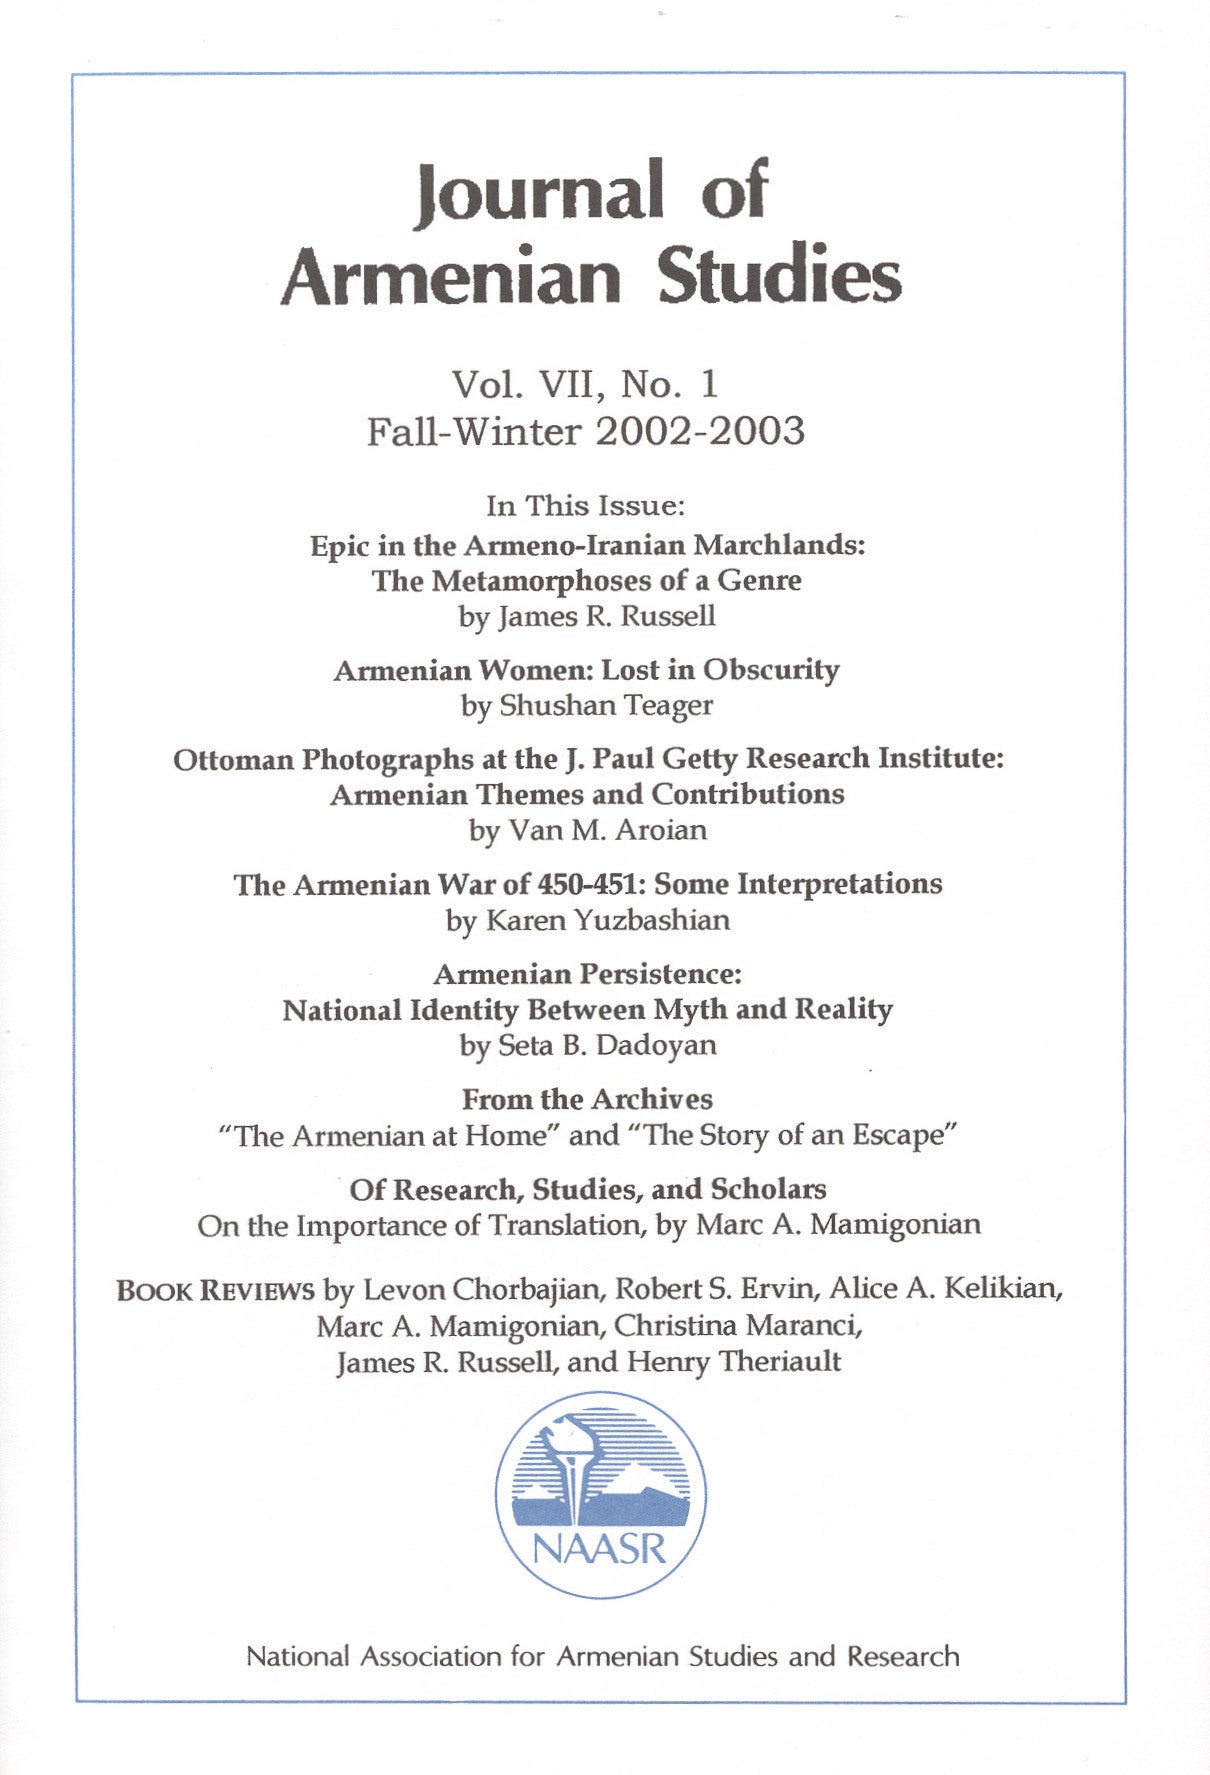 JOURNAL OF ARMENIAN STUDIES: Volume VII, Number 1: Fall-Winter 2002-2003